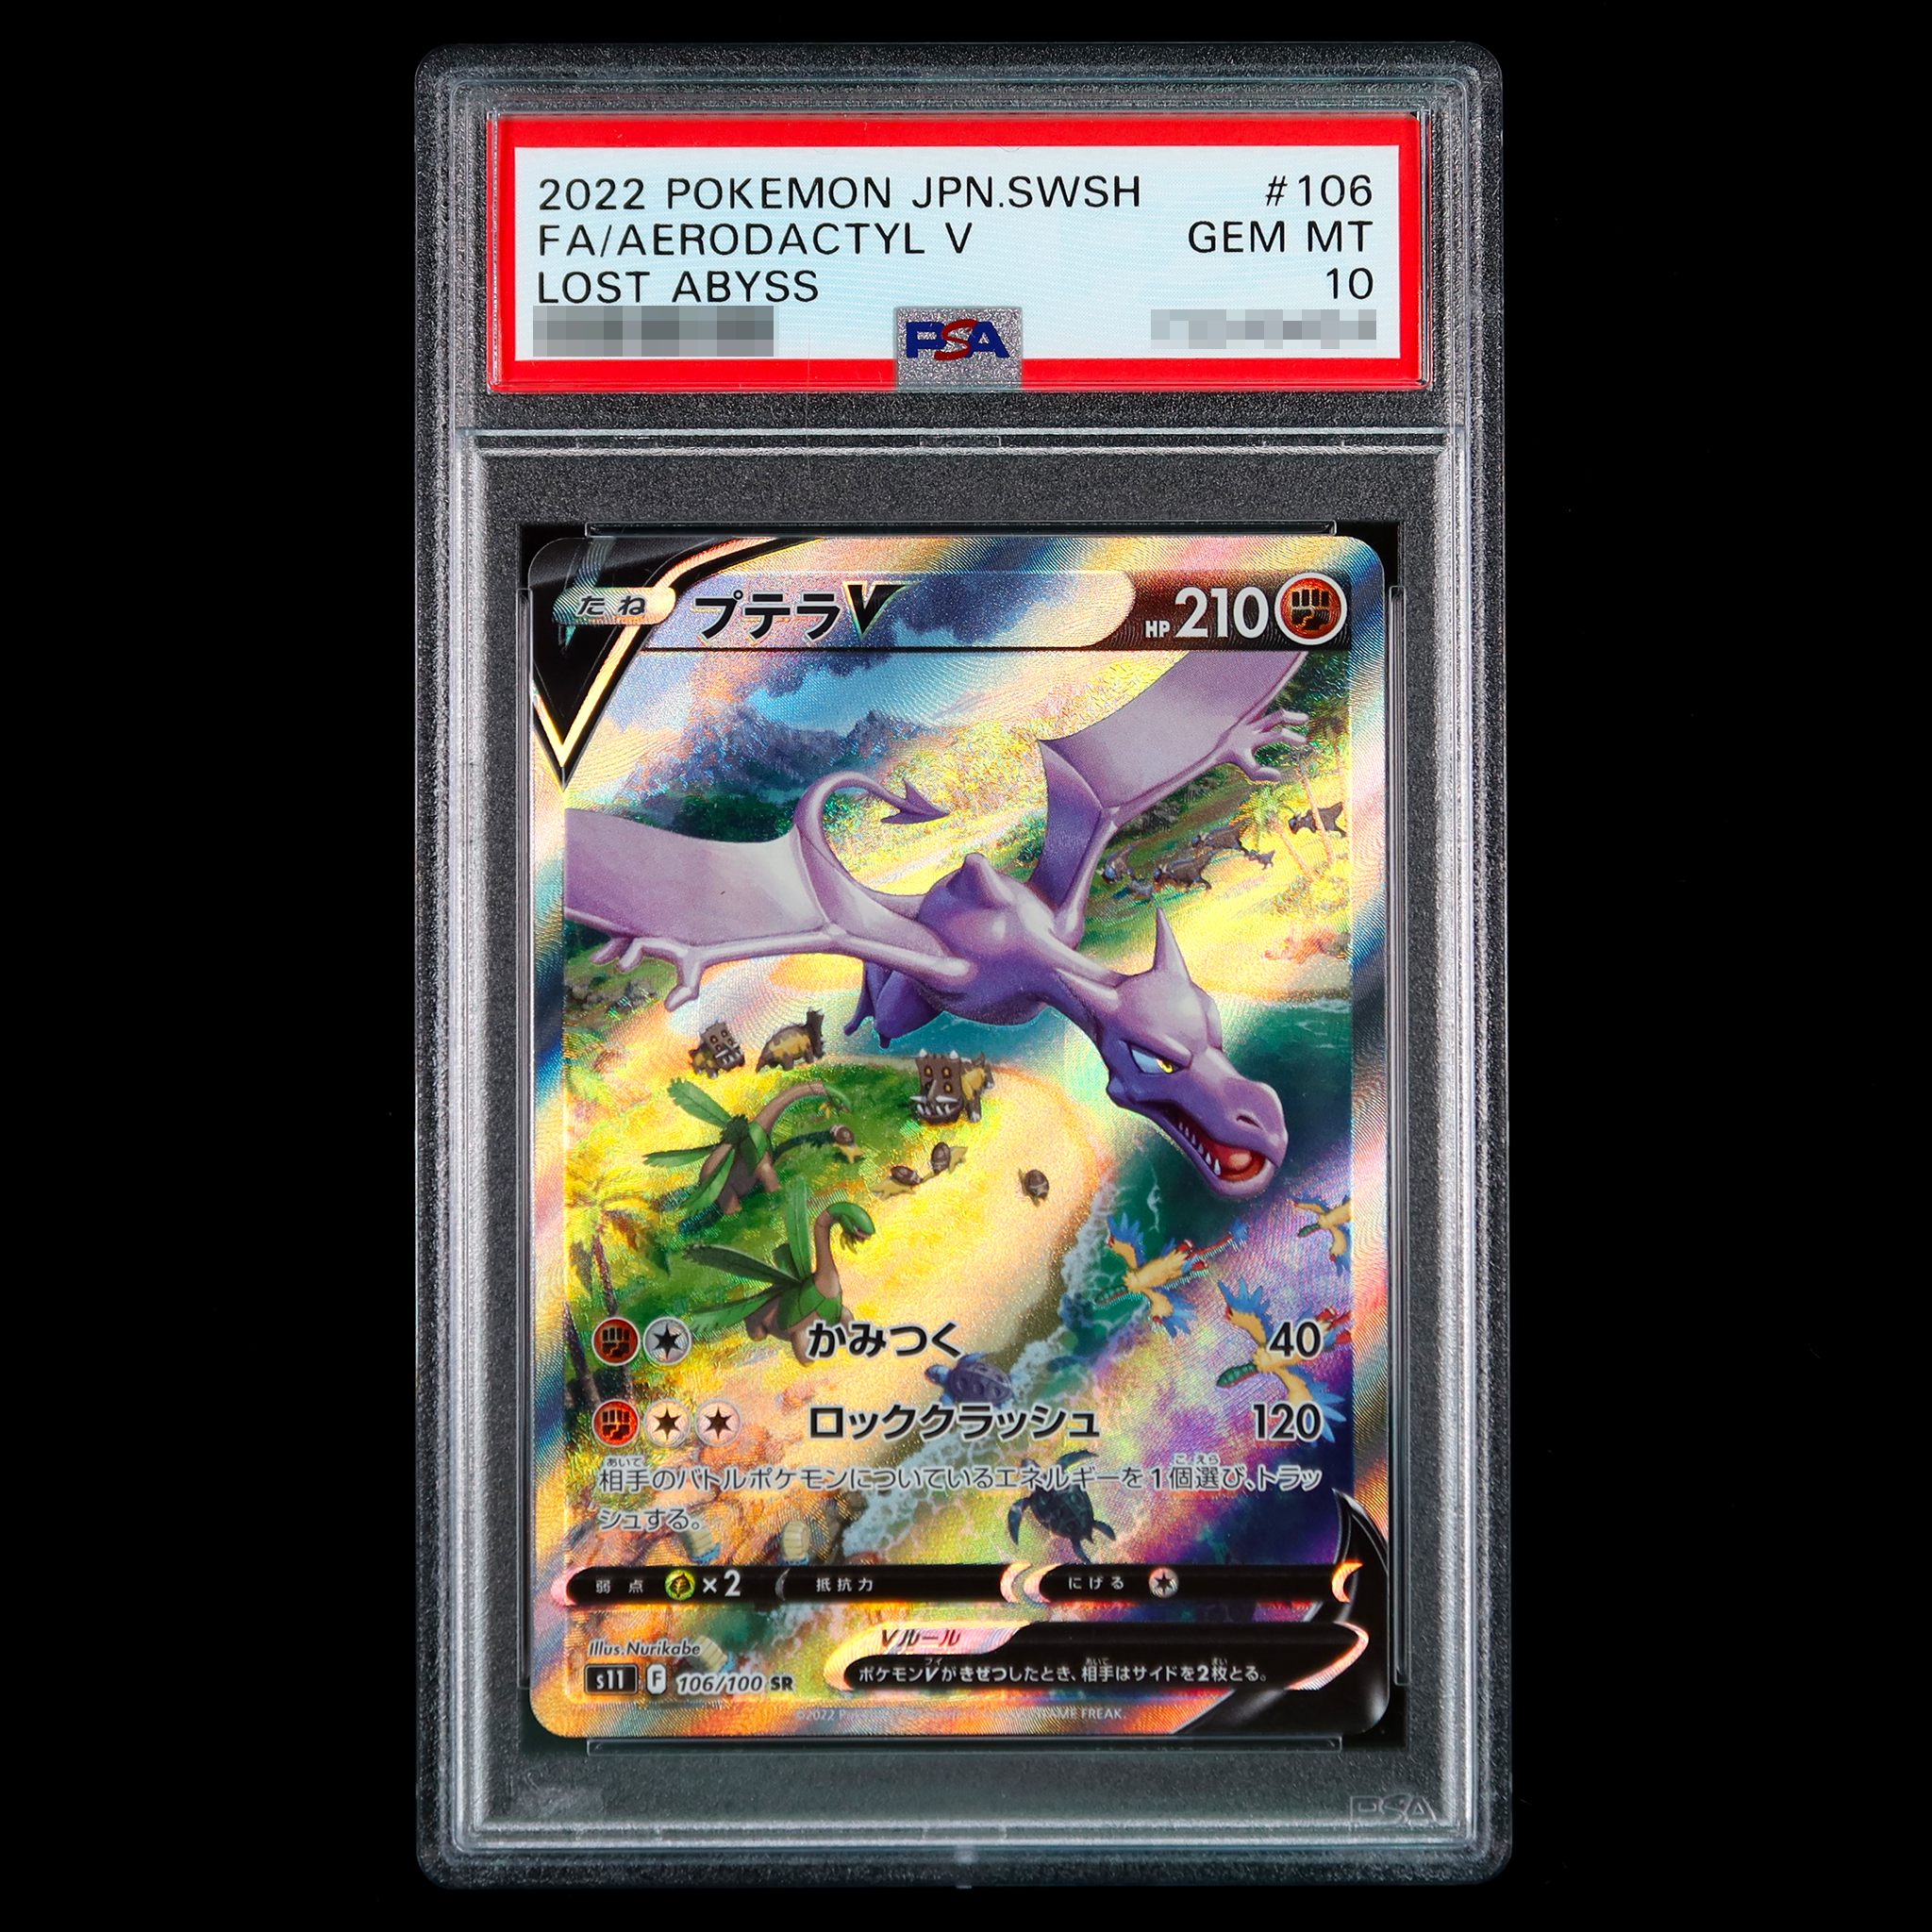 POKÉMON CARD GAME Sword & Shield Expansion pack ｢Lost Abyss｣  POKÉMON CARD GAME s11 106/100 Super Rare card PSA10  Aerodactyl V